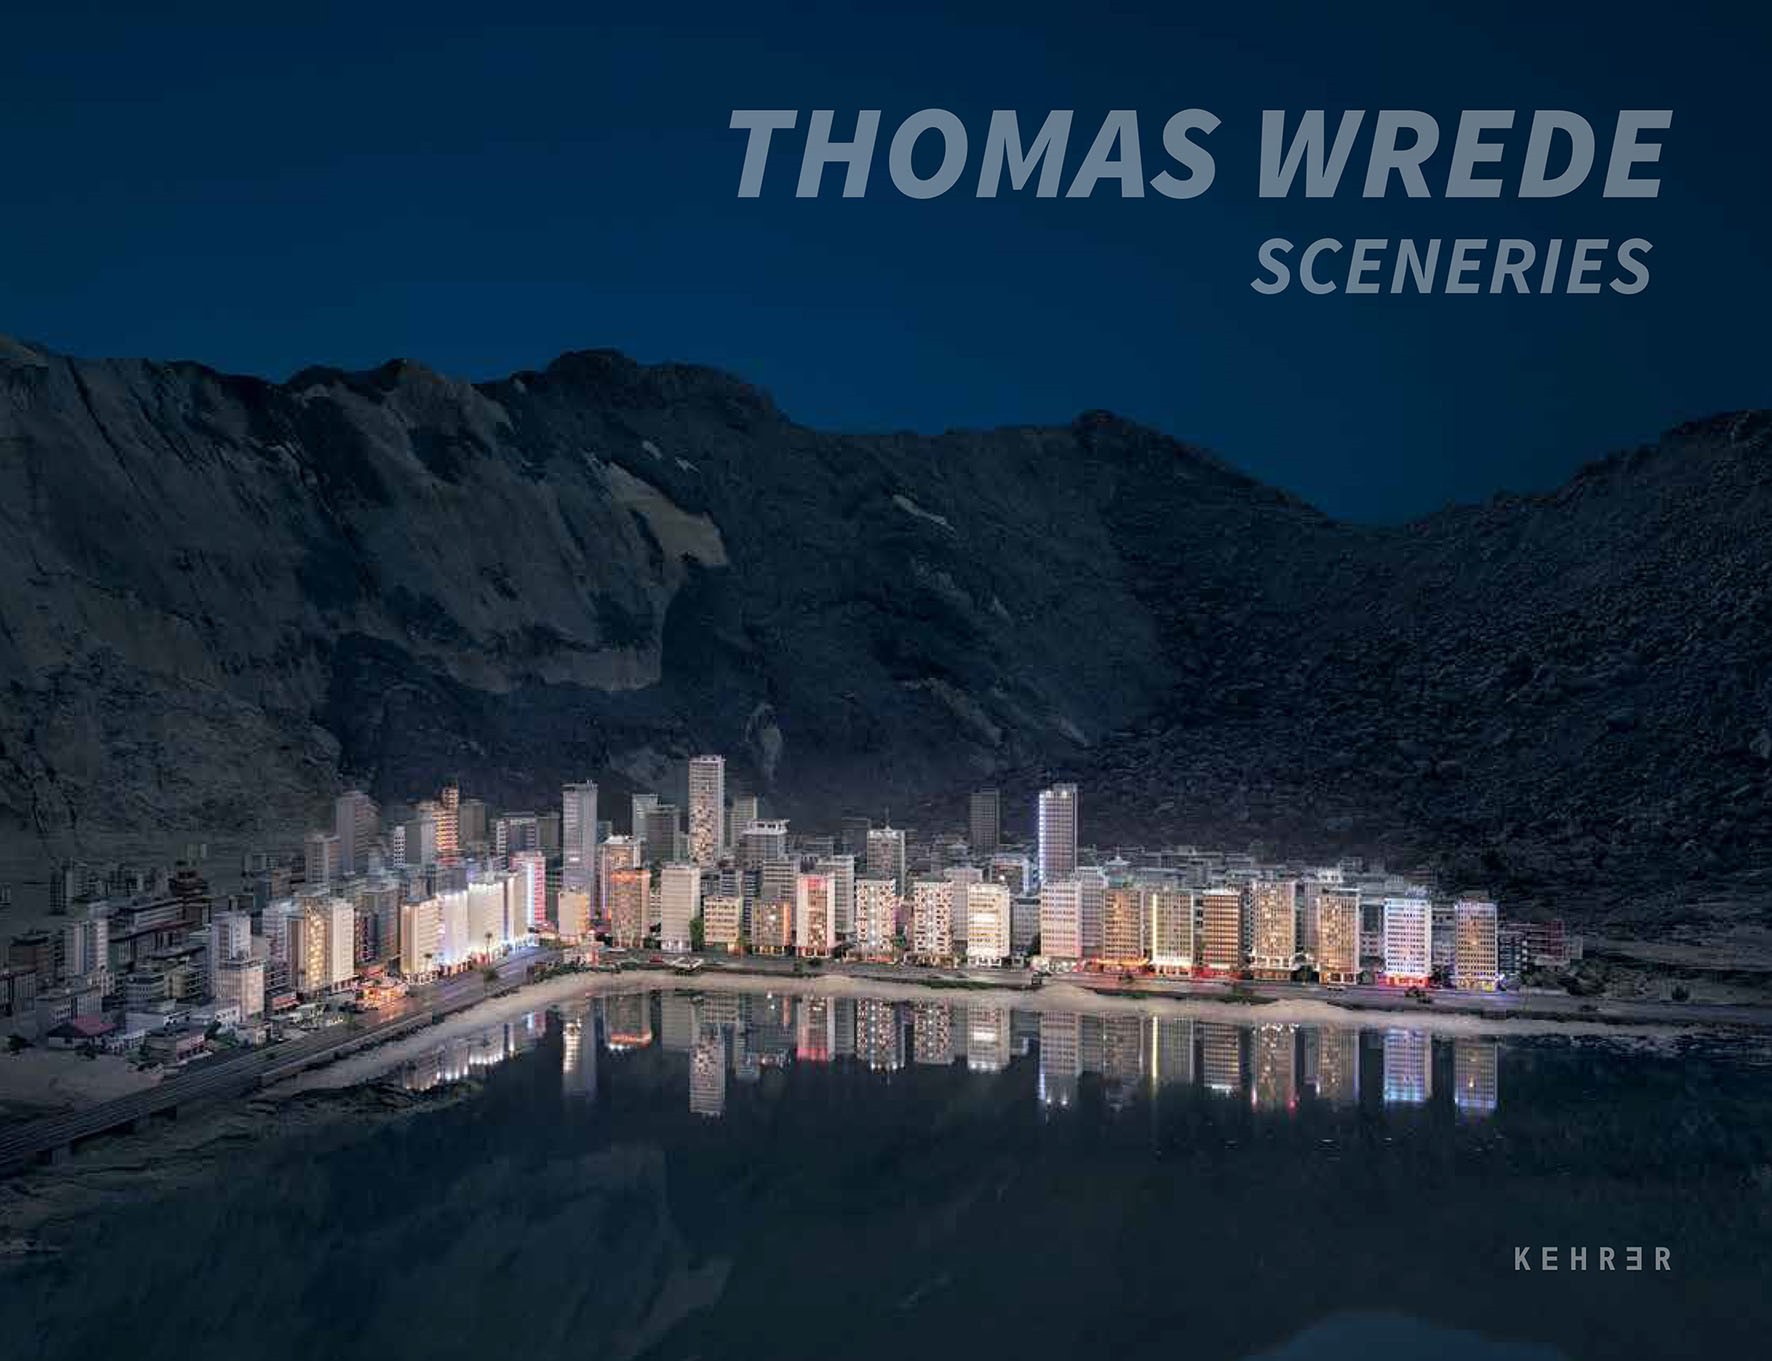 Katalog Cover:
Thomas Wrede, Sceneries, Heidelberg 2018